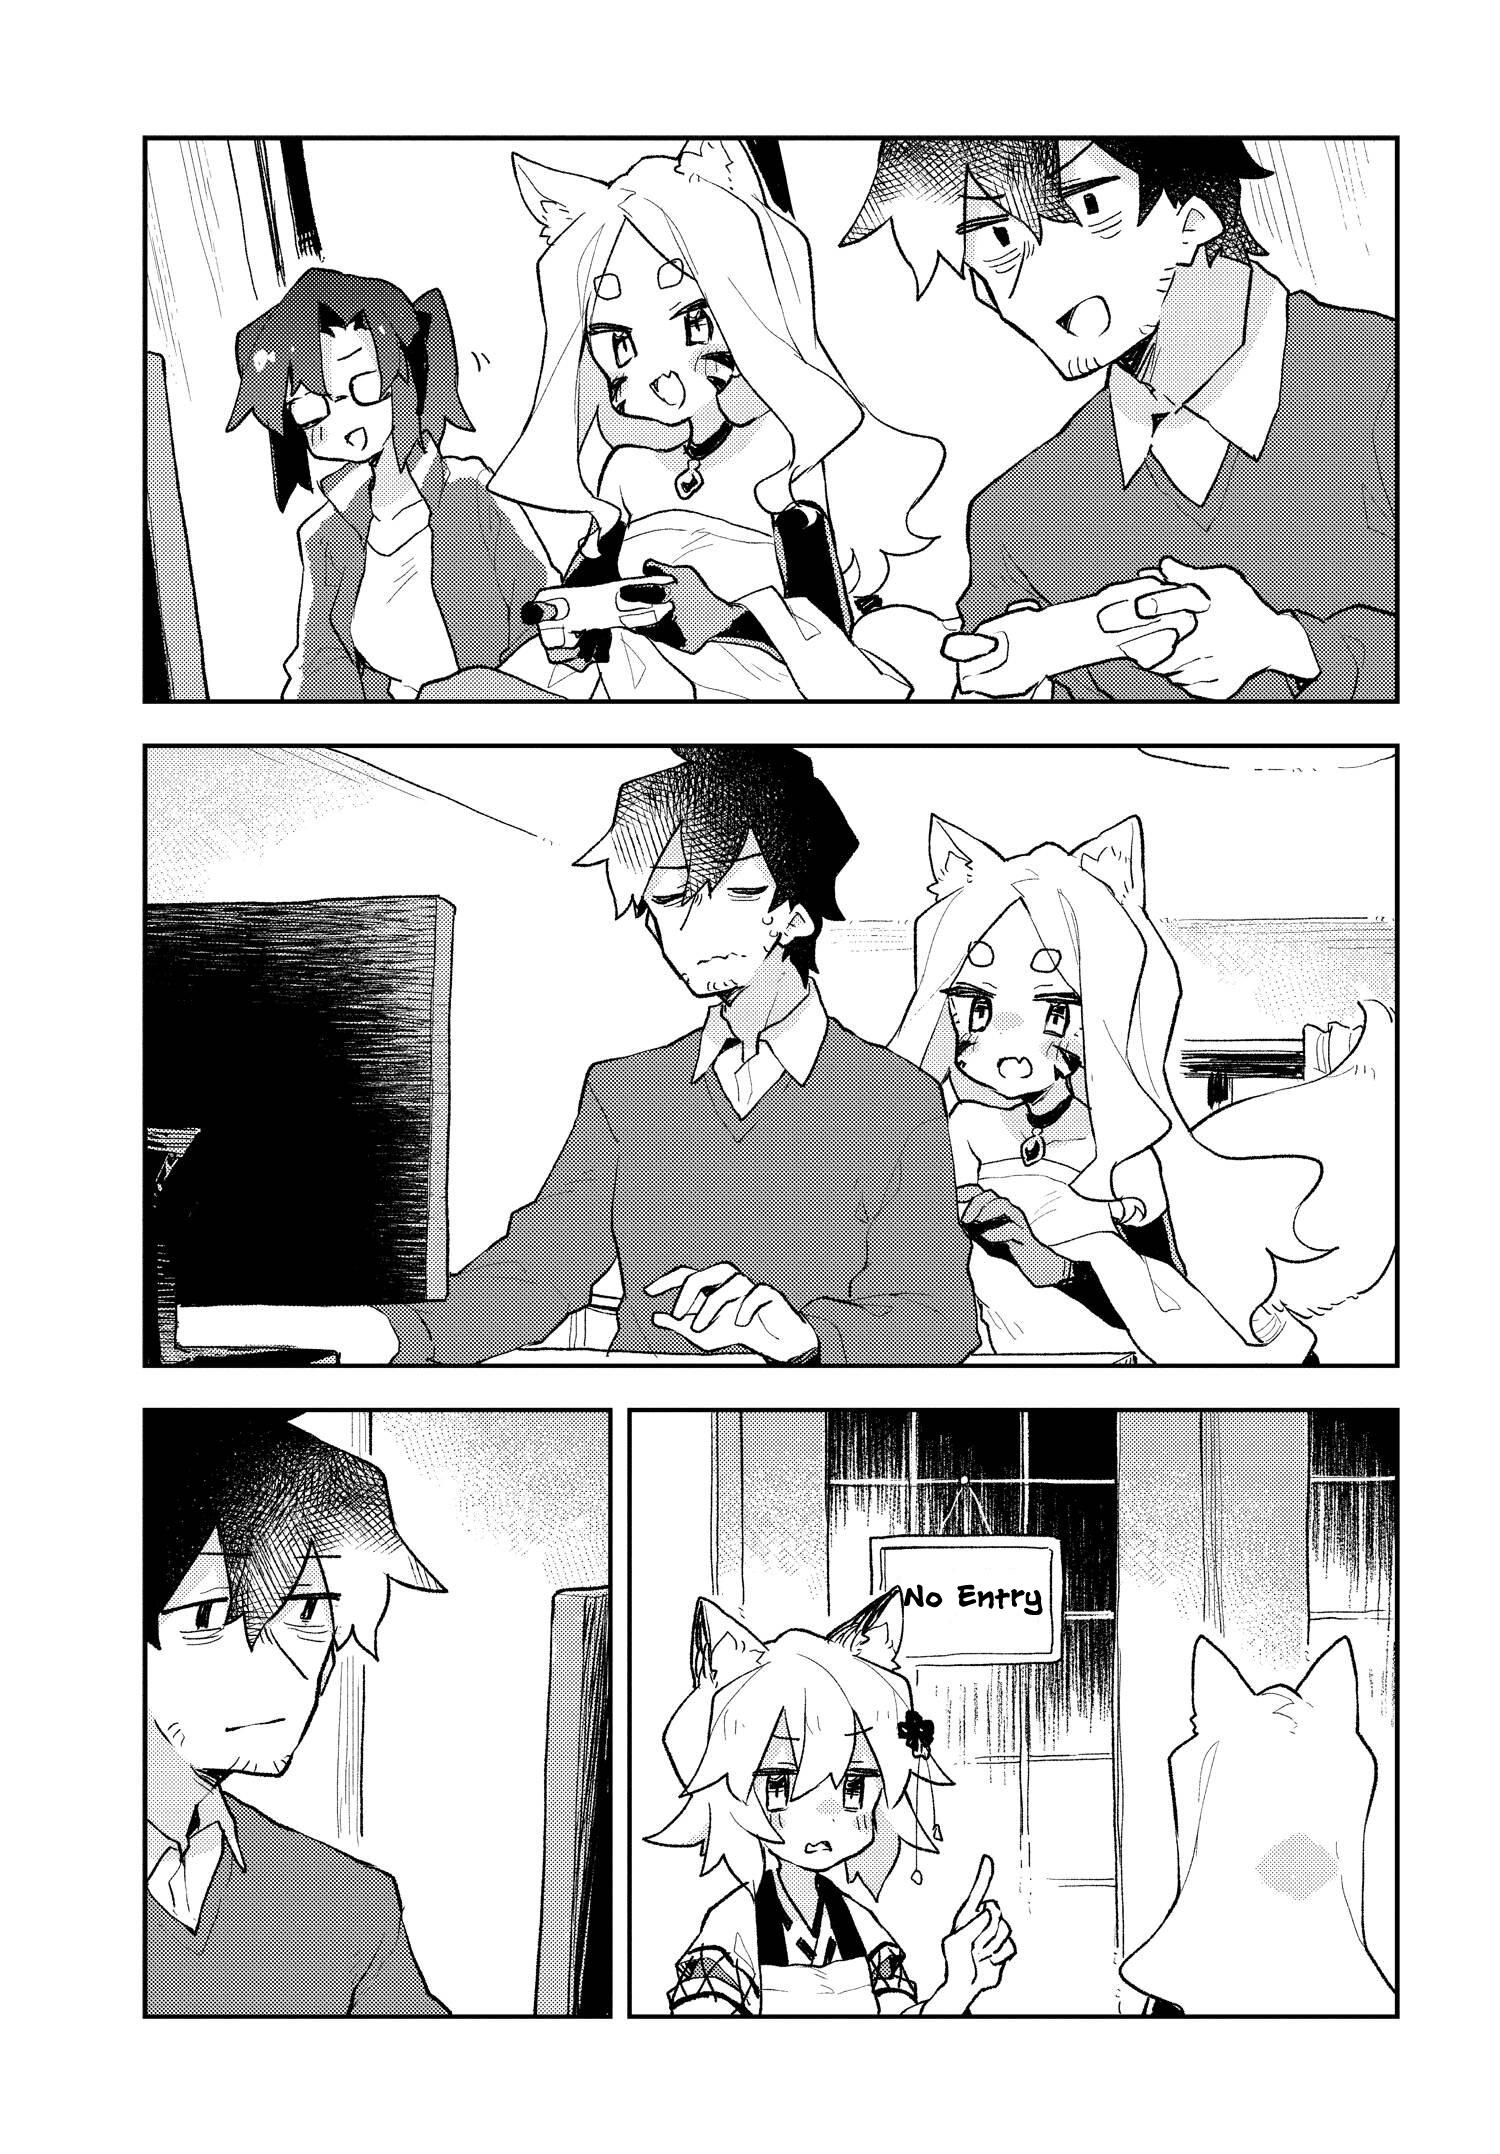 Sewayaki Kitsune No Senko-San Vol.9 Chapter 67 page 9 - Mangakakalot